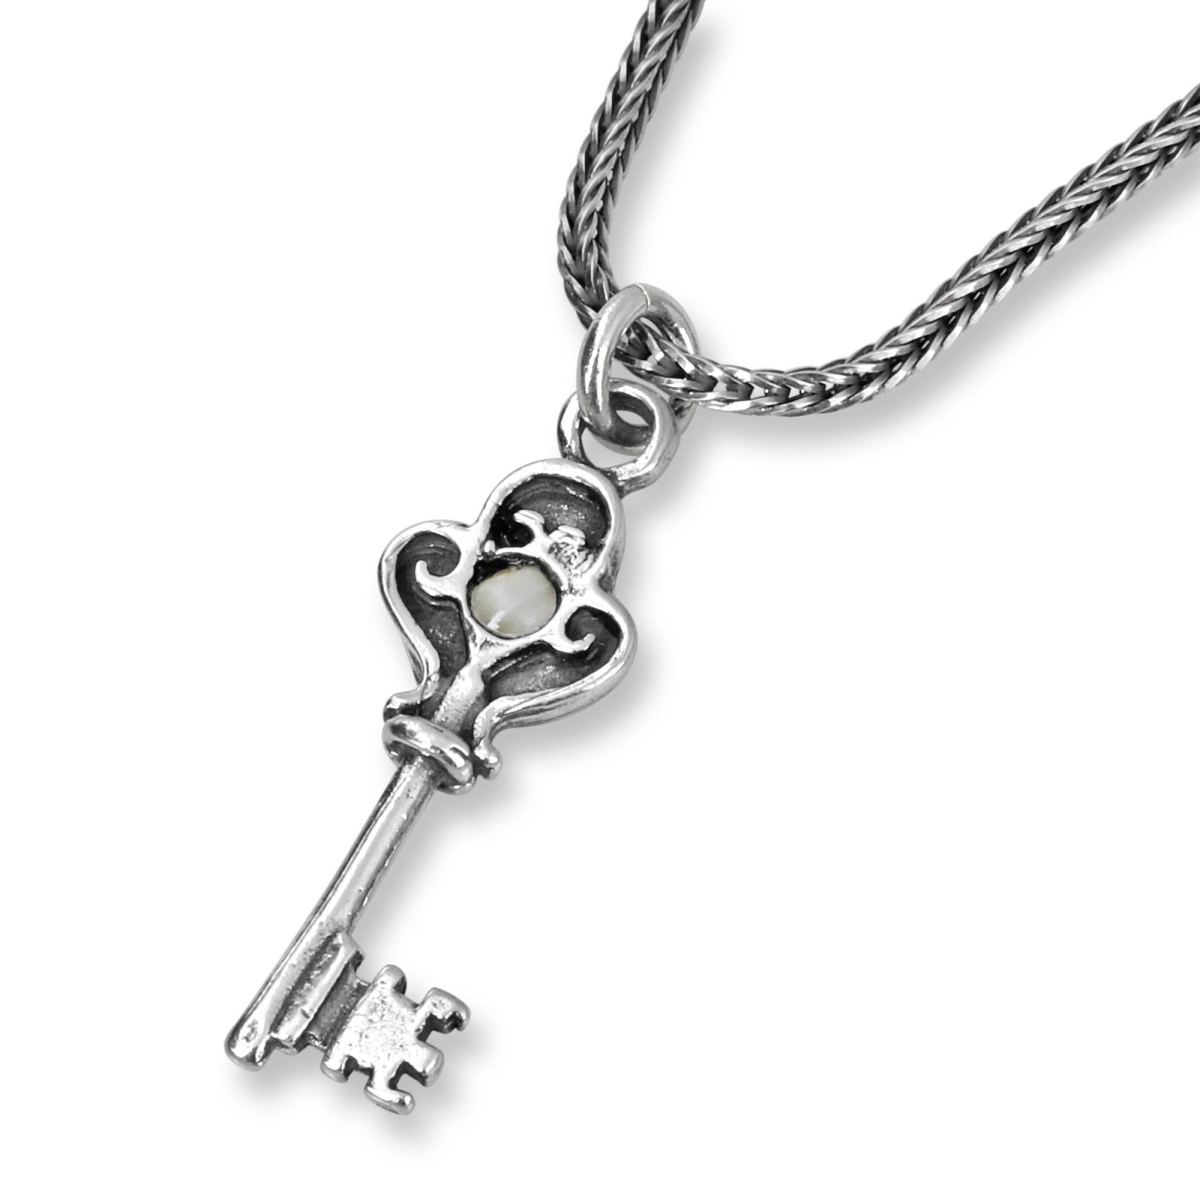 Sterling Silver Kabbalah Key Necklace with Chrysoberyl - 1